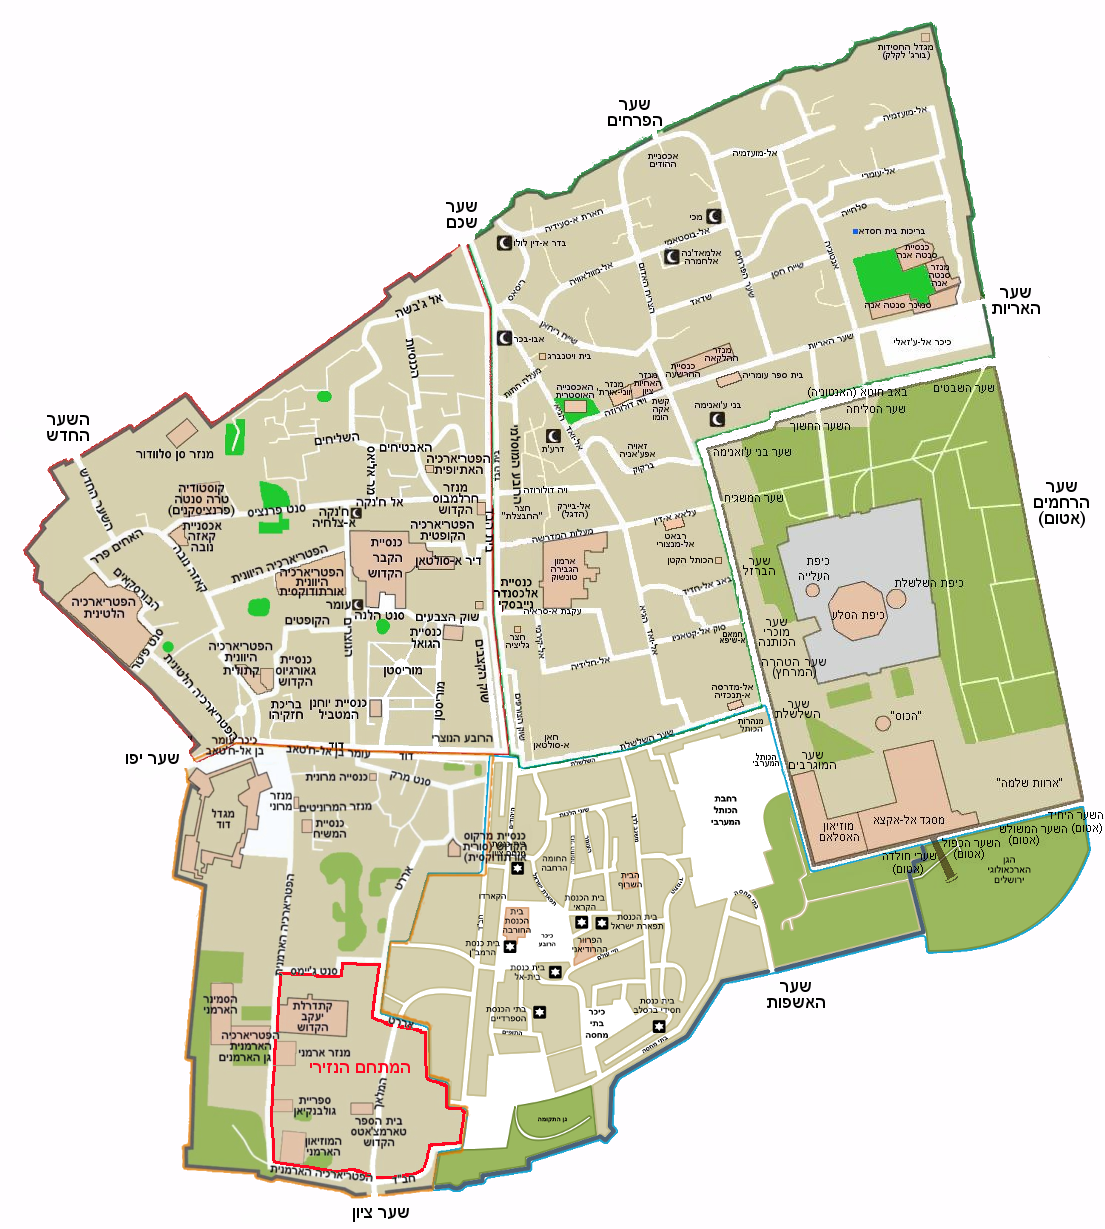 Map of the Old City of Jerusalem